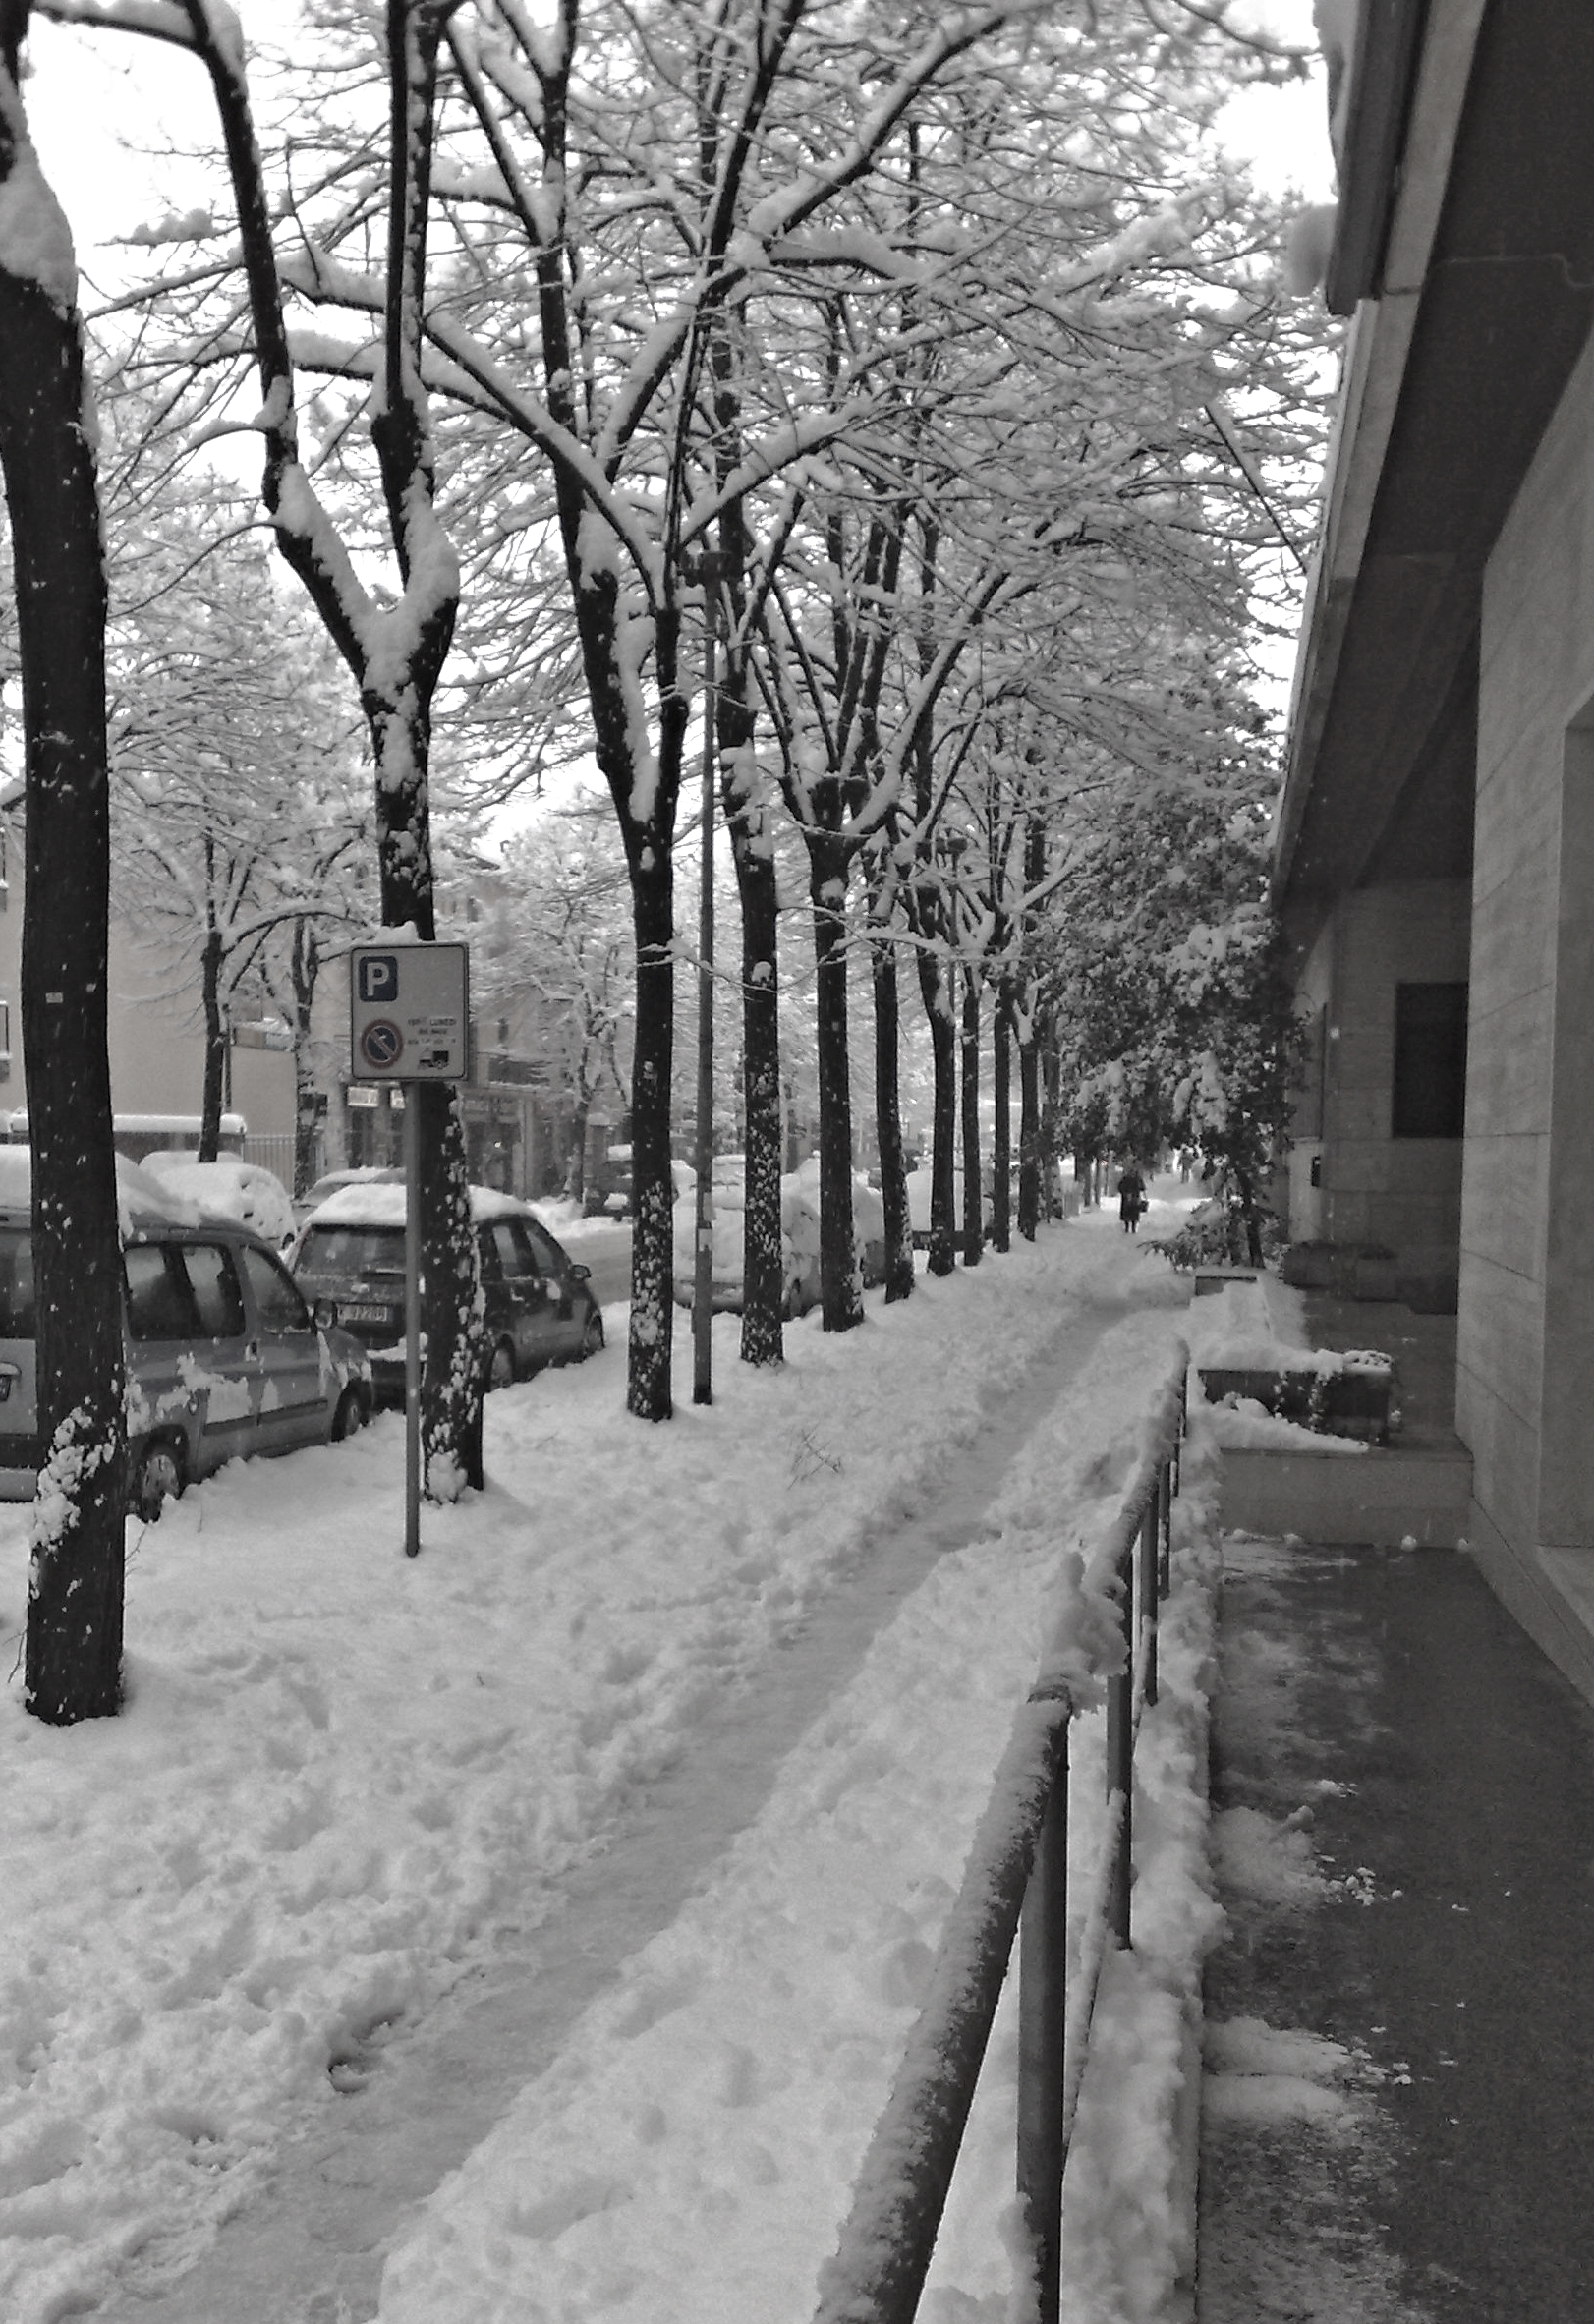 Snowfall in Pavia in January 2009...